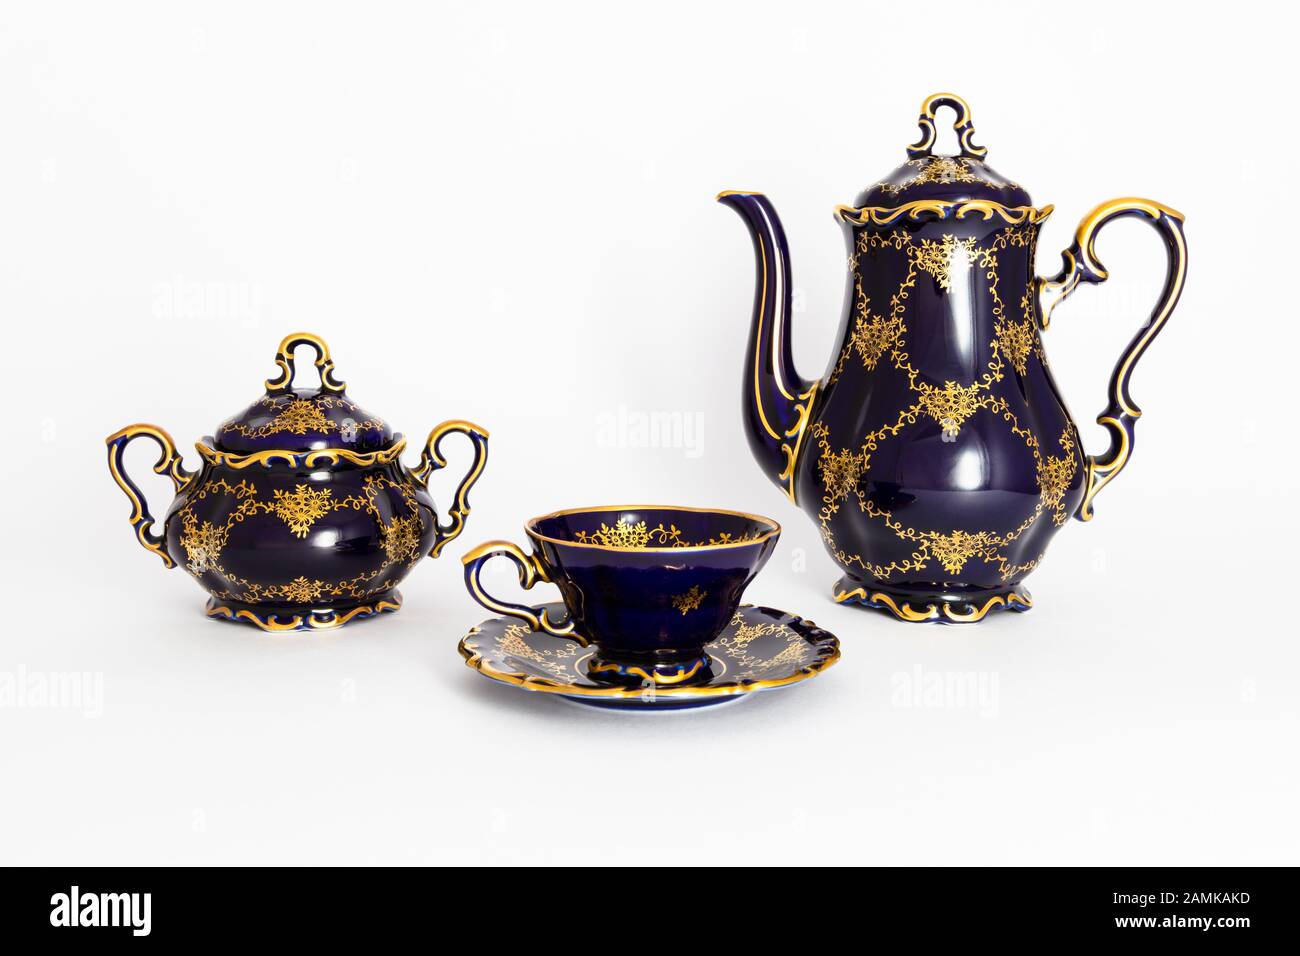 Closeup of a beautiful cobalt blue colored vintage porcelain tea set with golden floral pattern on white background. The set includes a tea pot, a sug Stock Photo